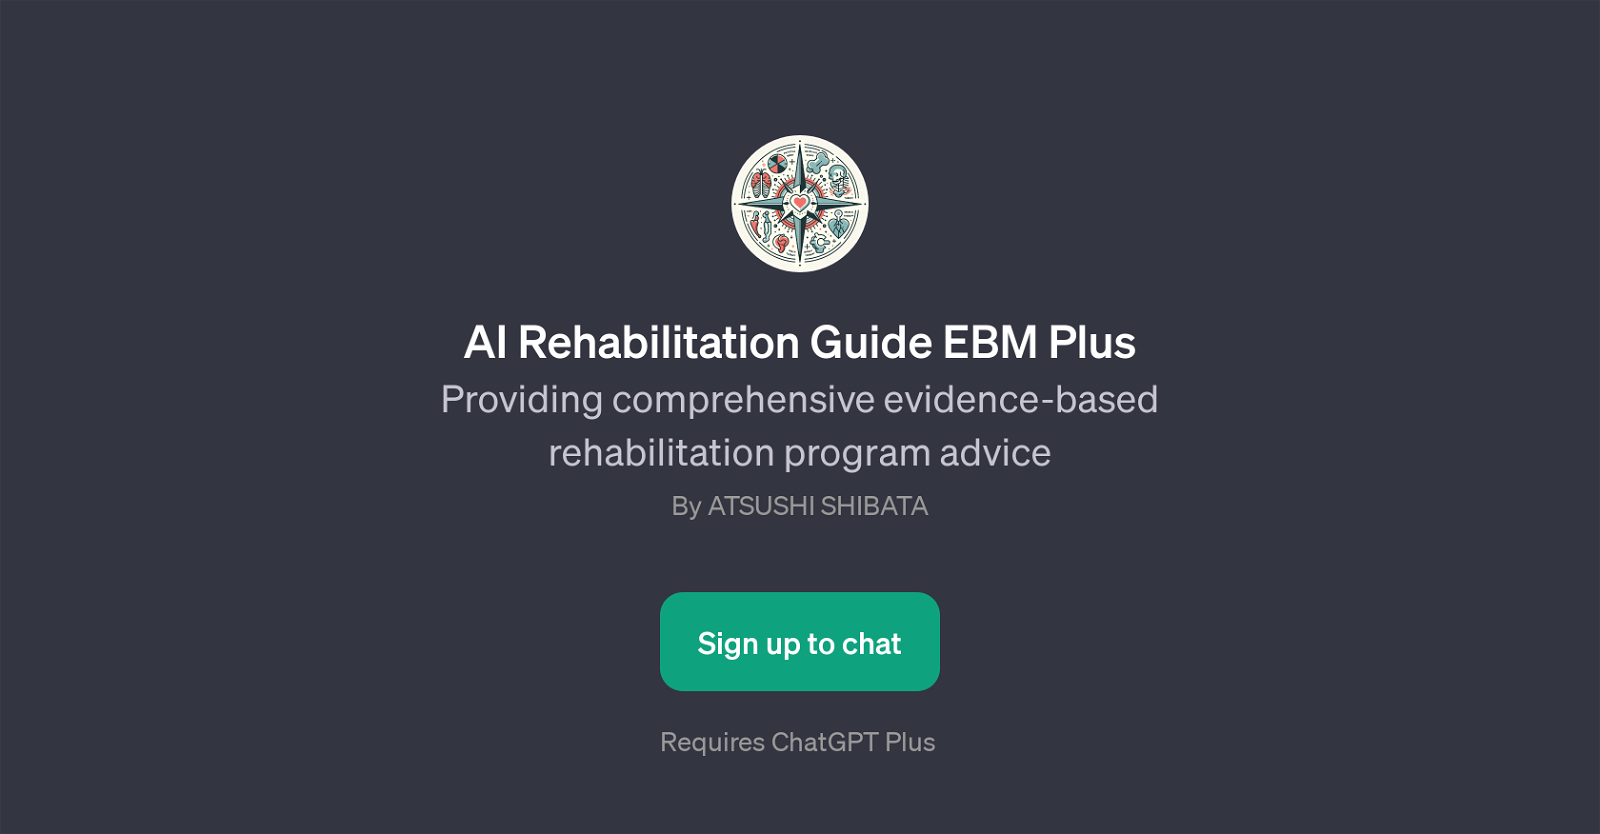 AI Rehabilitation Guide EBM Plus website